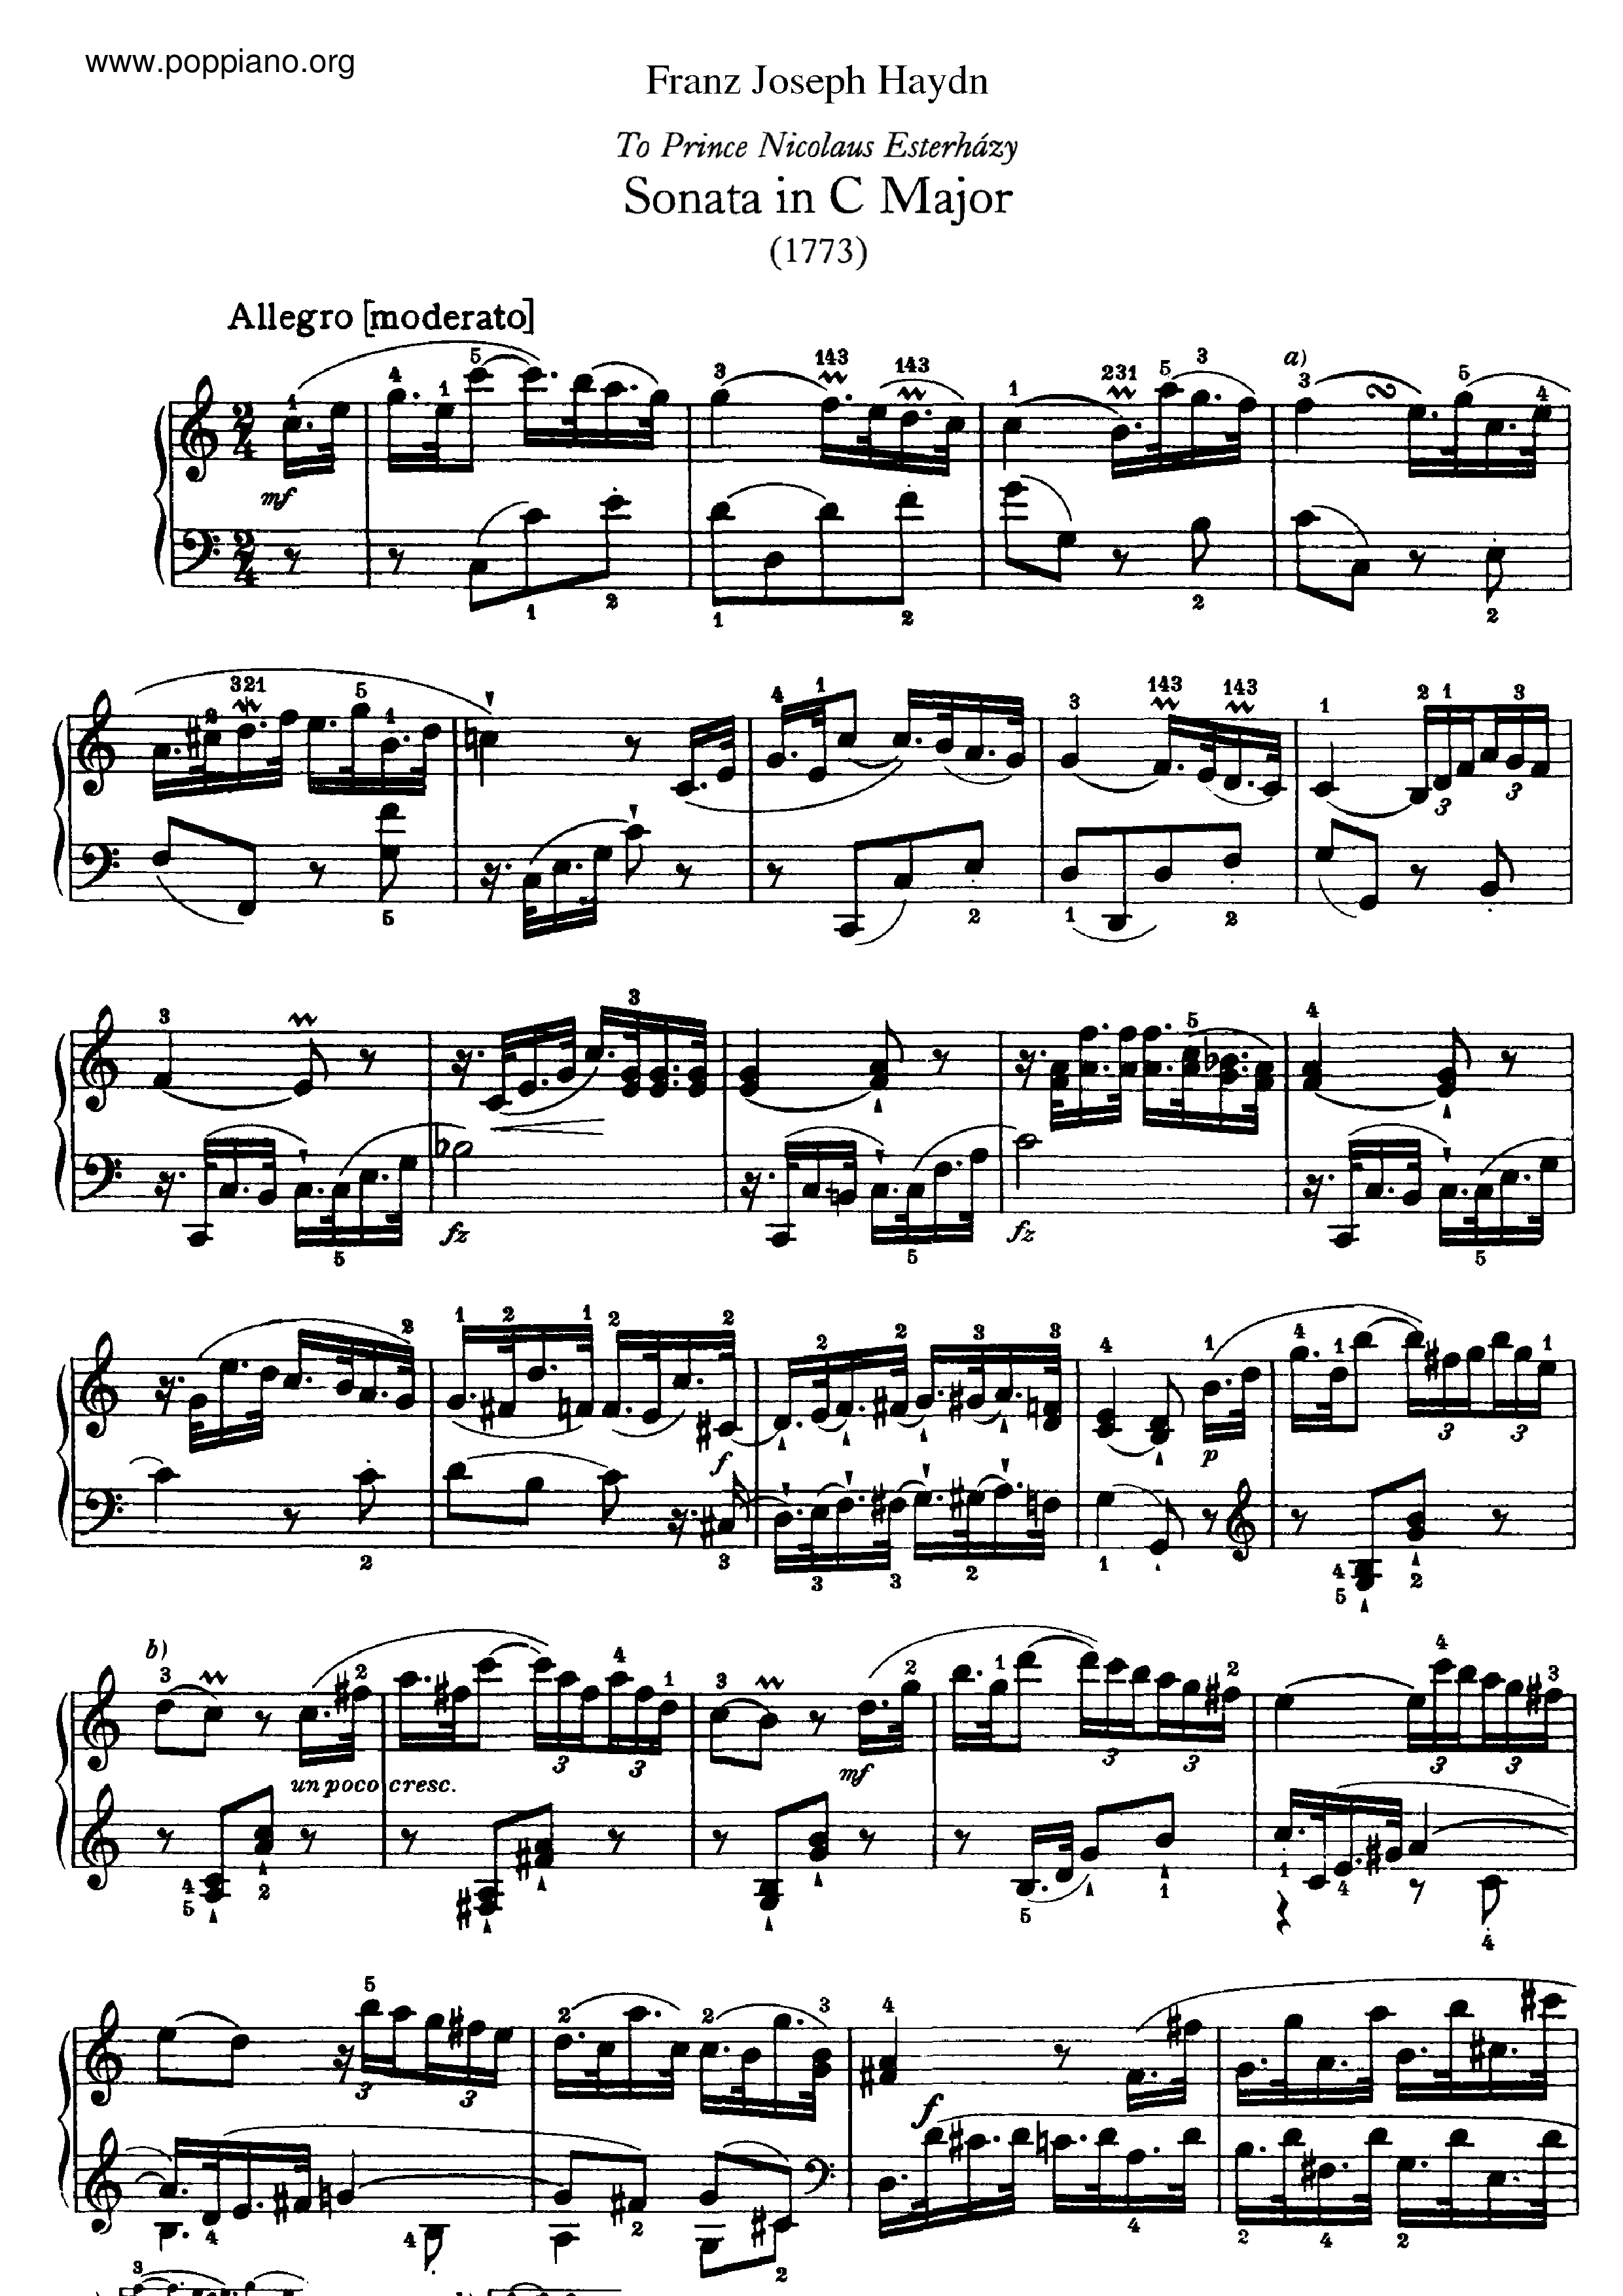 Sonata No.21 in C majorピアノ譜